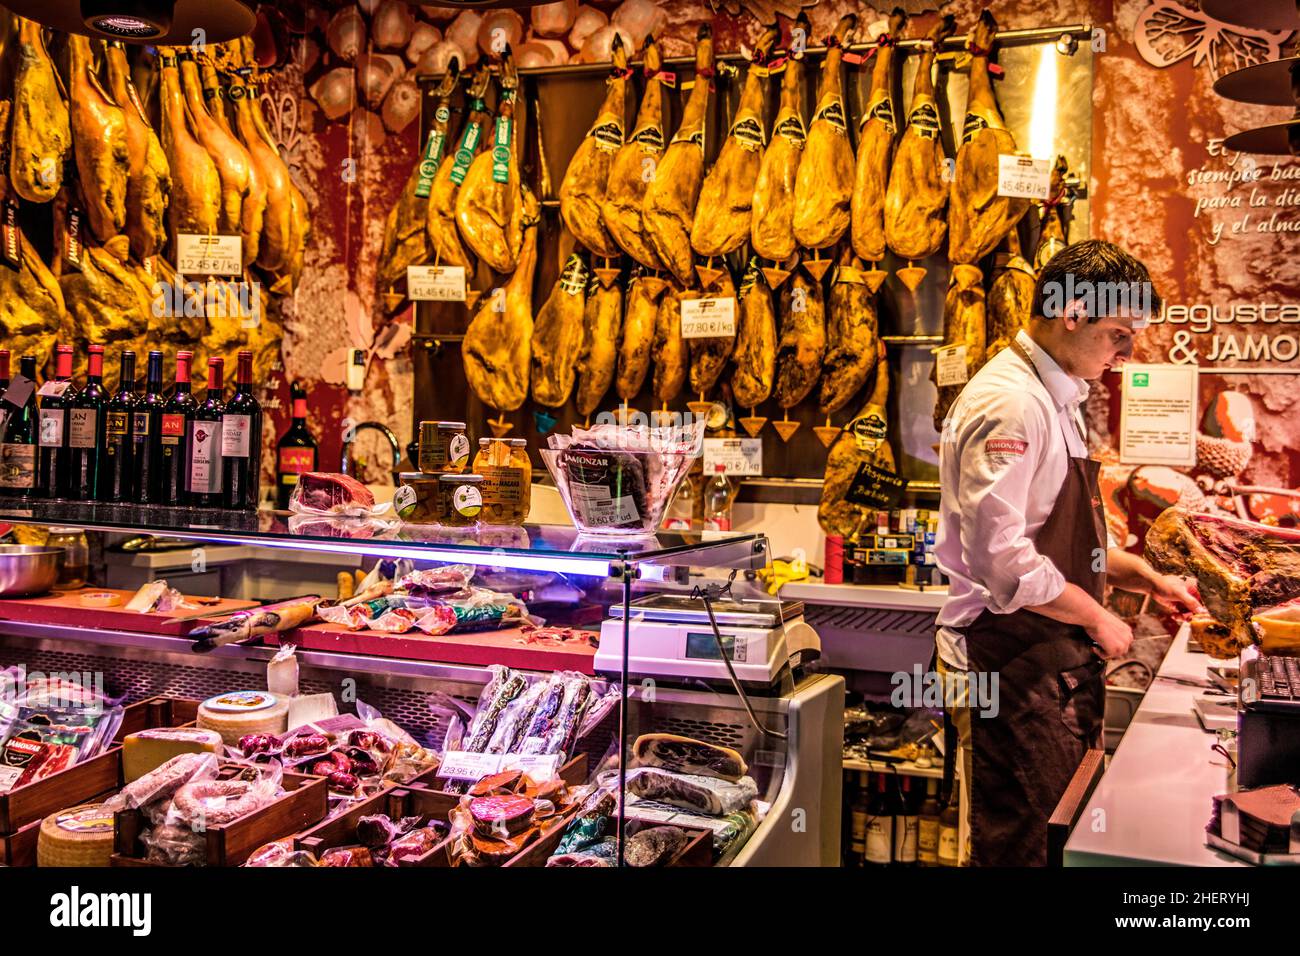 Shop with Serrano ham, Mercado San Agustin in Granada, Andalusia, Spain Stock Photo